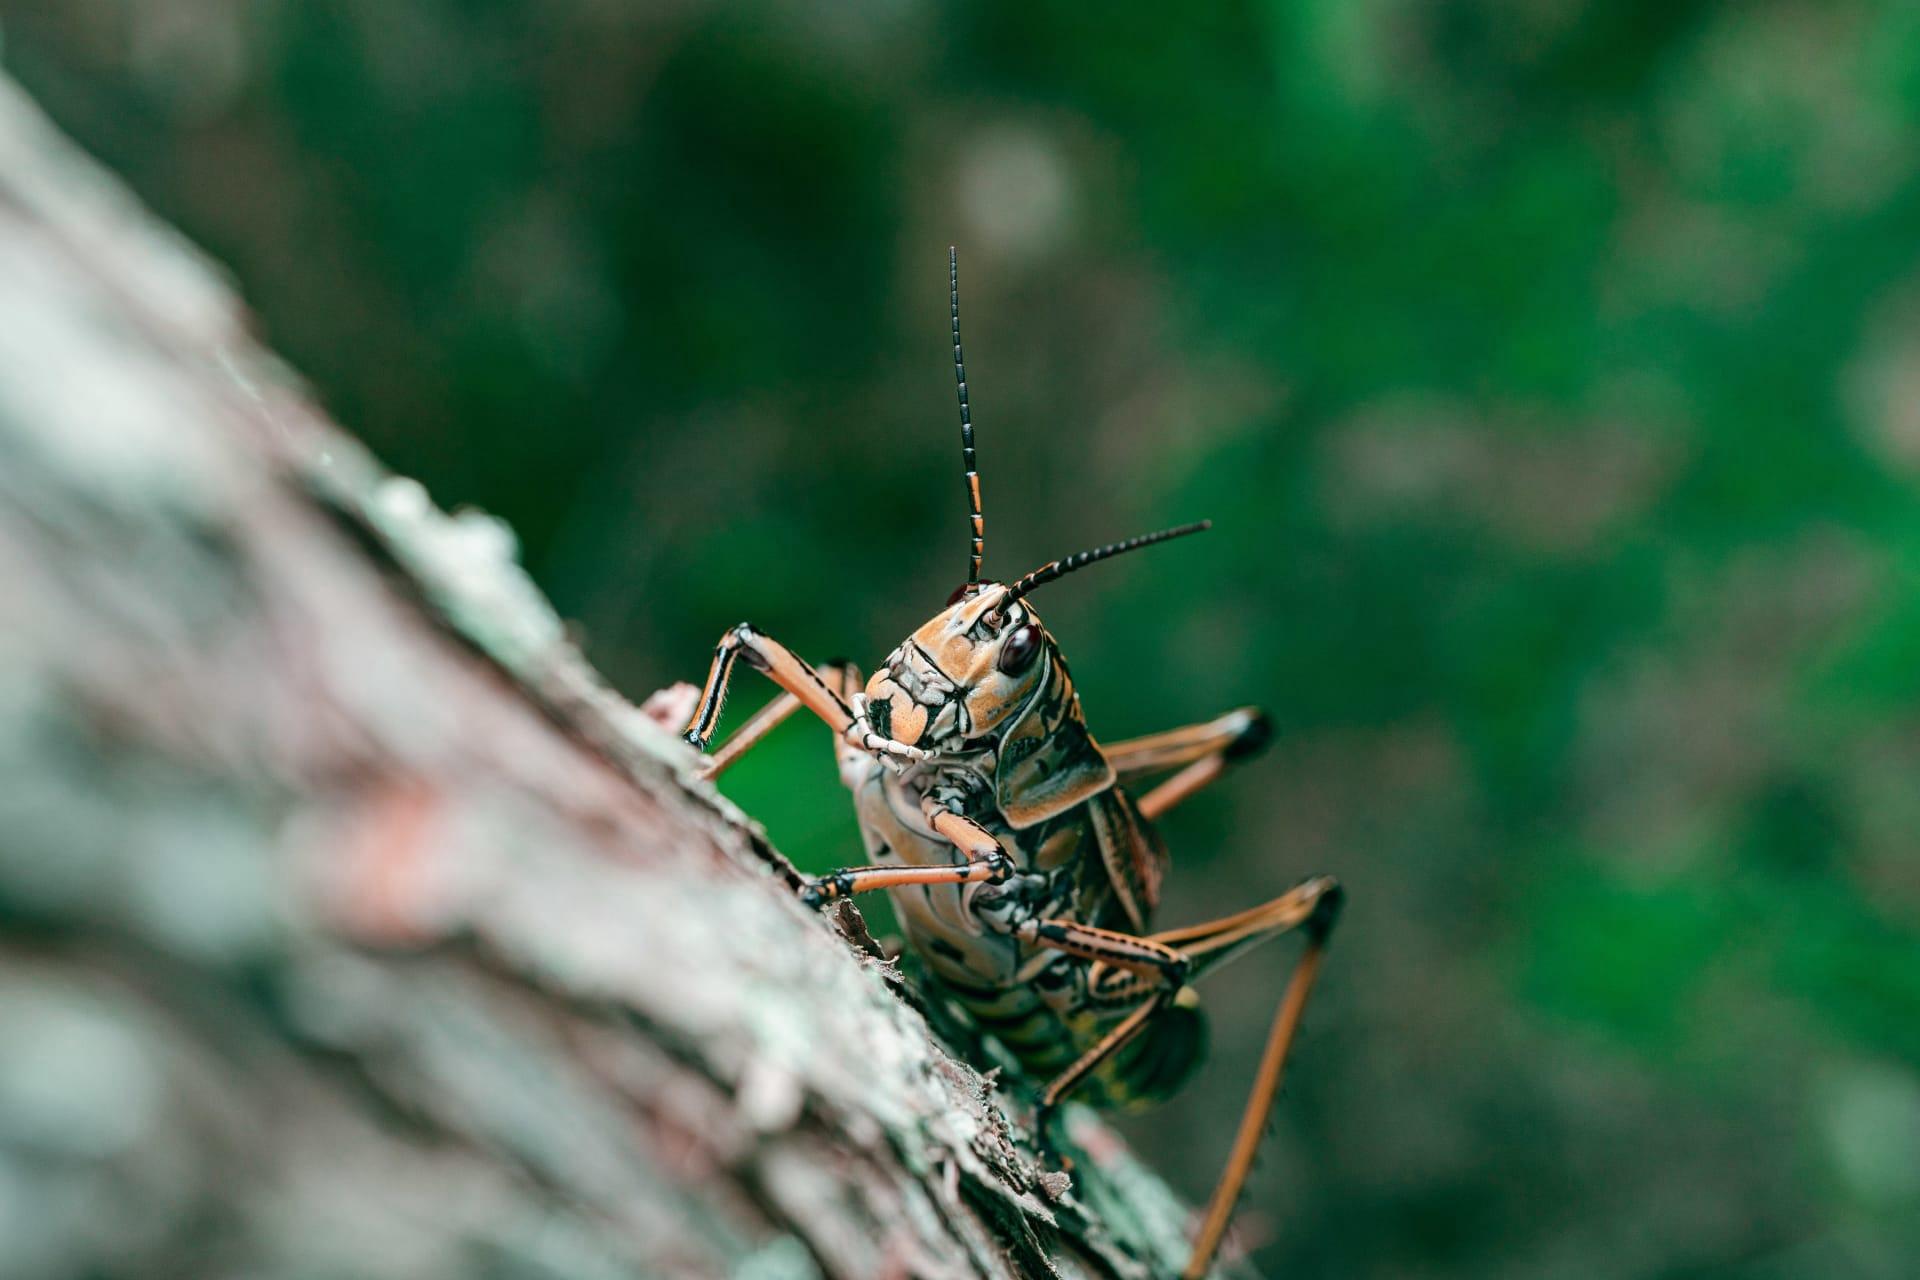 Lubber grasshopper pictures